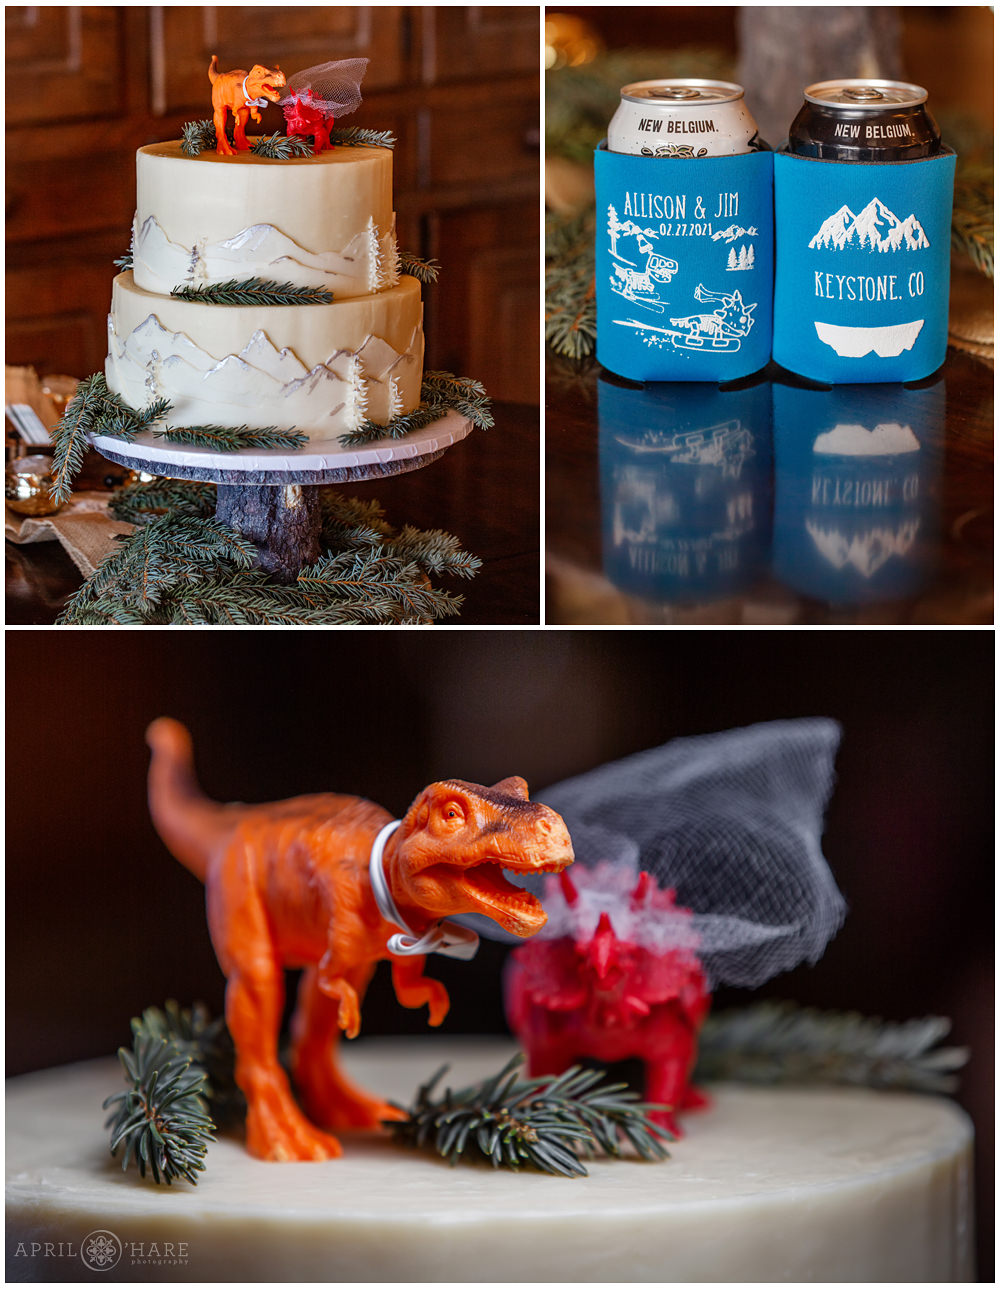 Dinosaur wedding cake with mountains on it at Keystone Colorado wedding